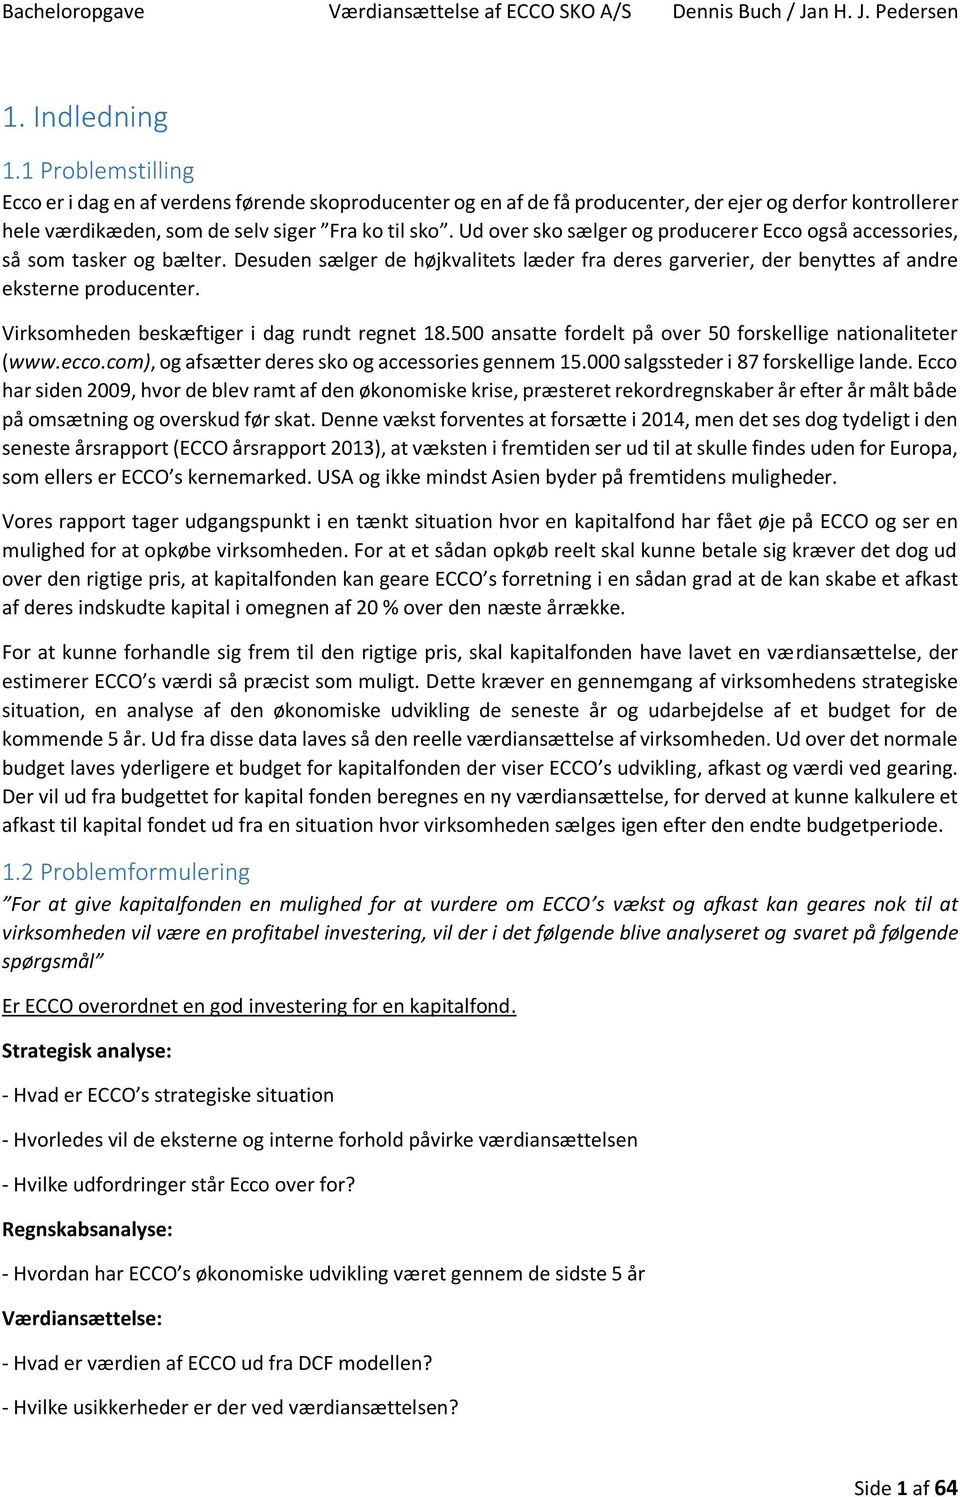 A valuation of the Danish shoe company ECCO SKO A/S - PDF download